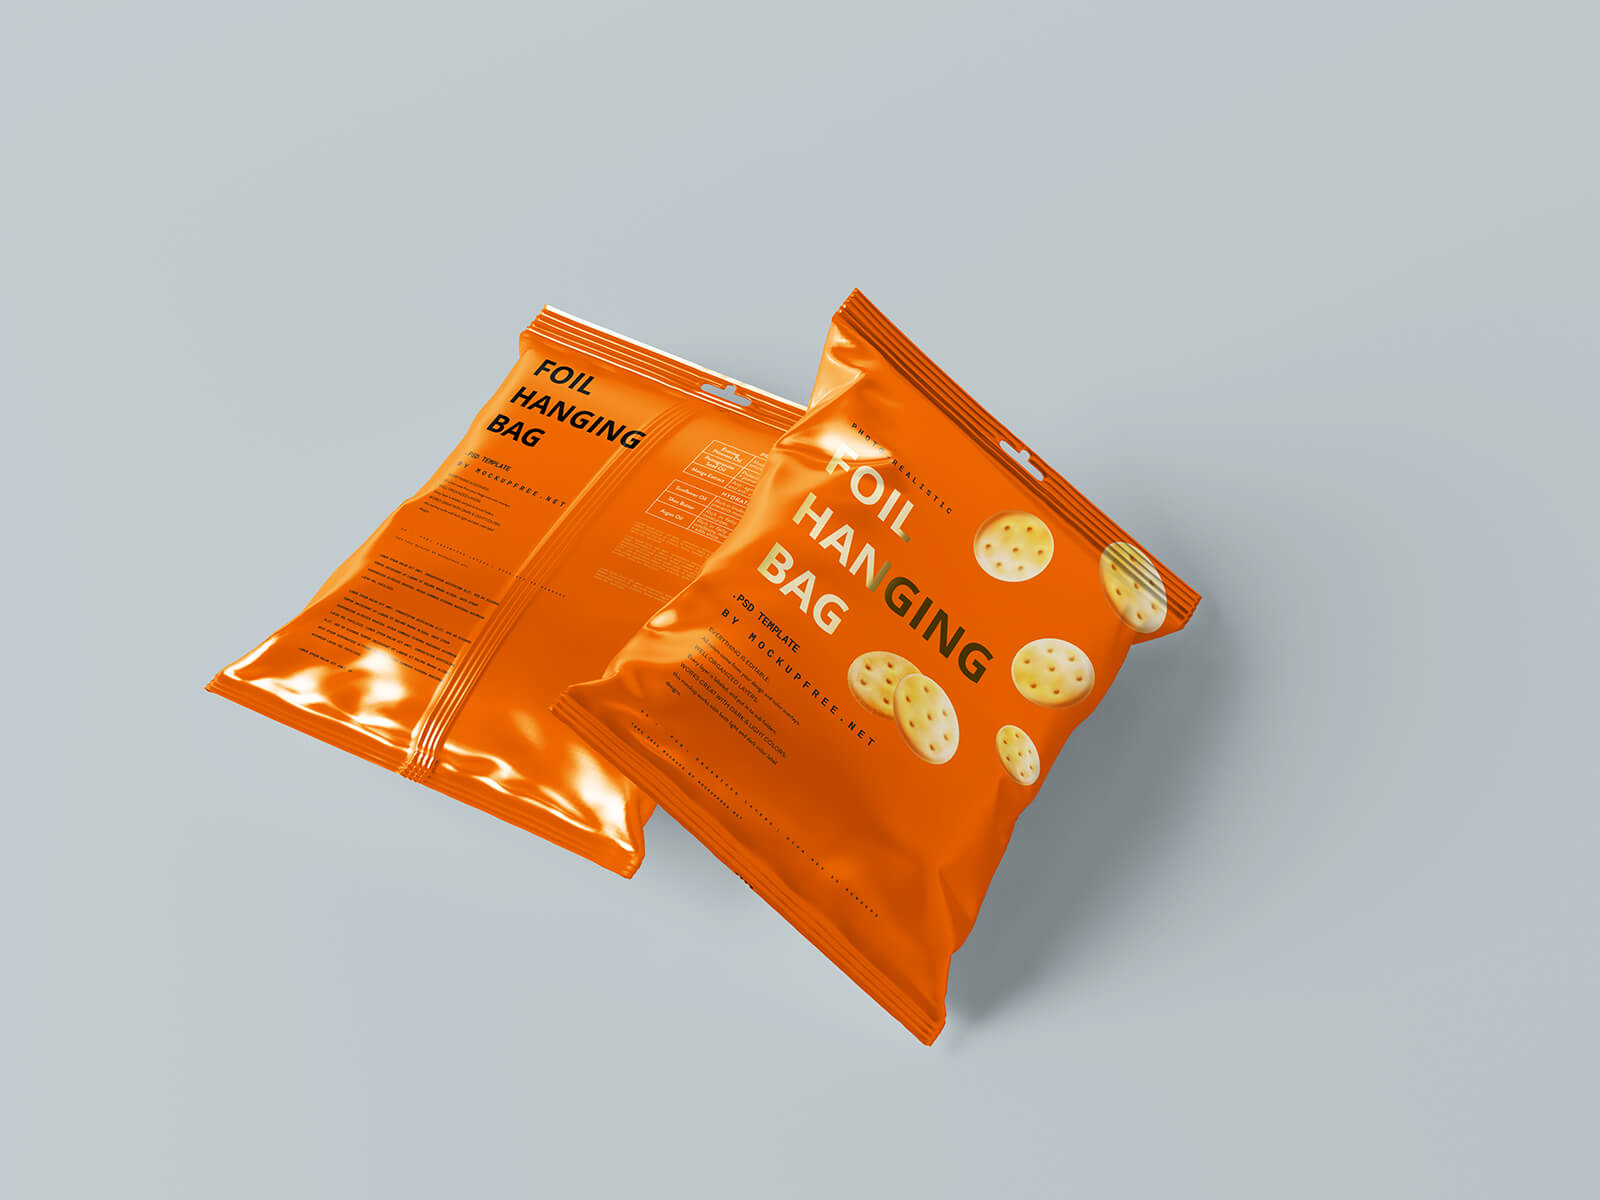 10 Free Foil Snack Hanging Packaging Bag Mockup Files